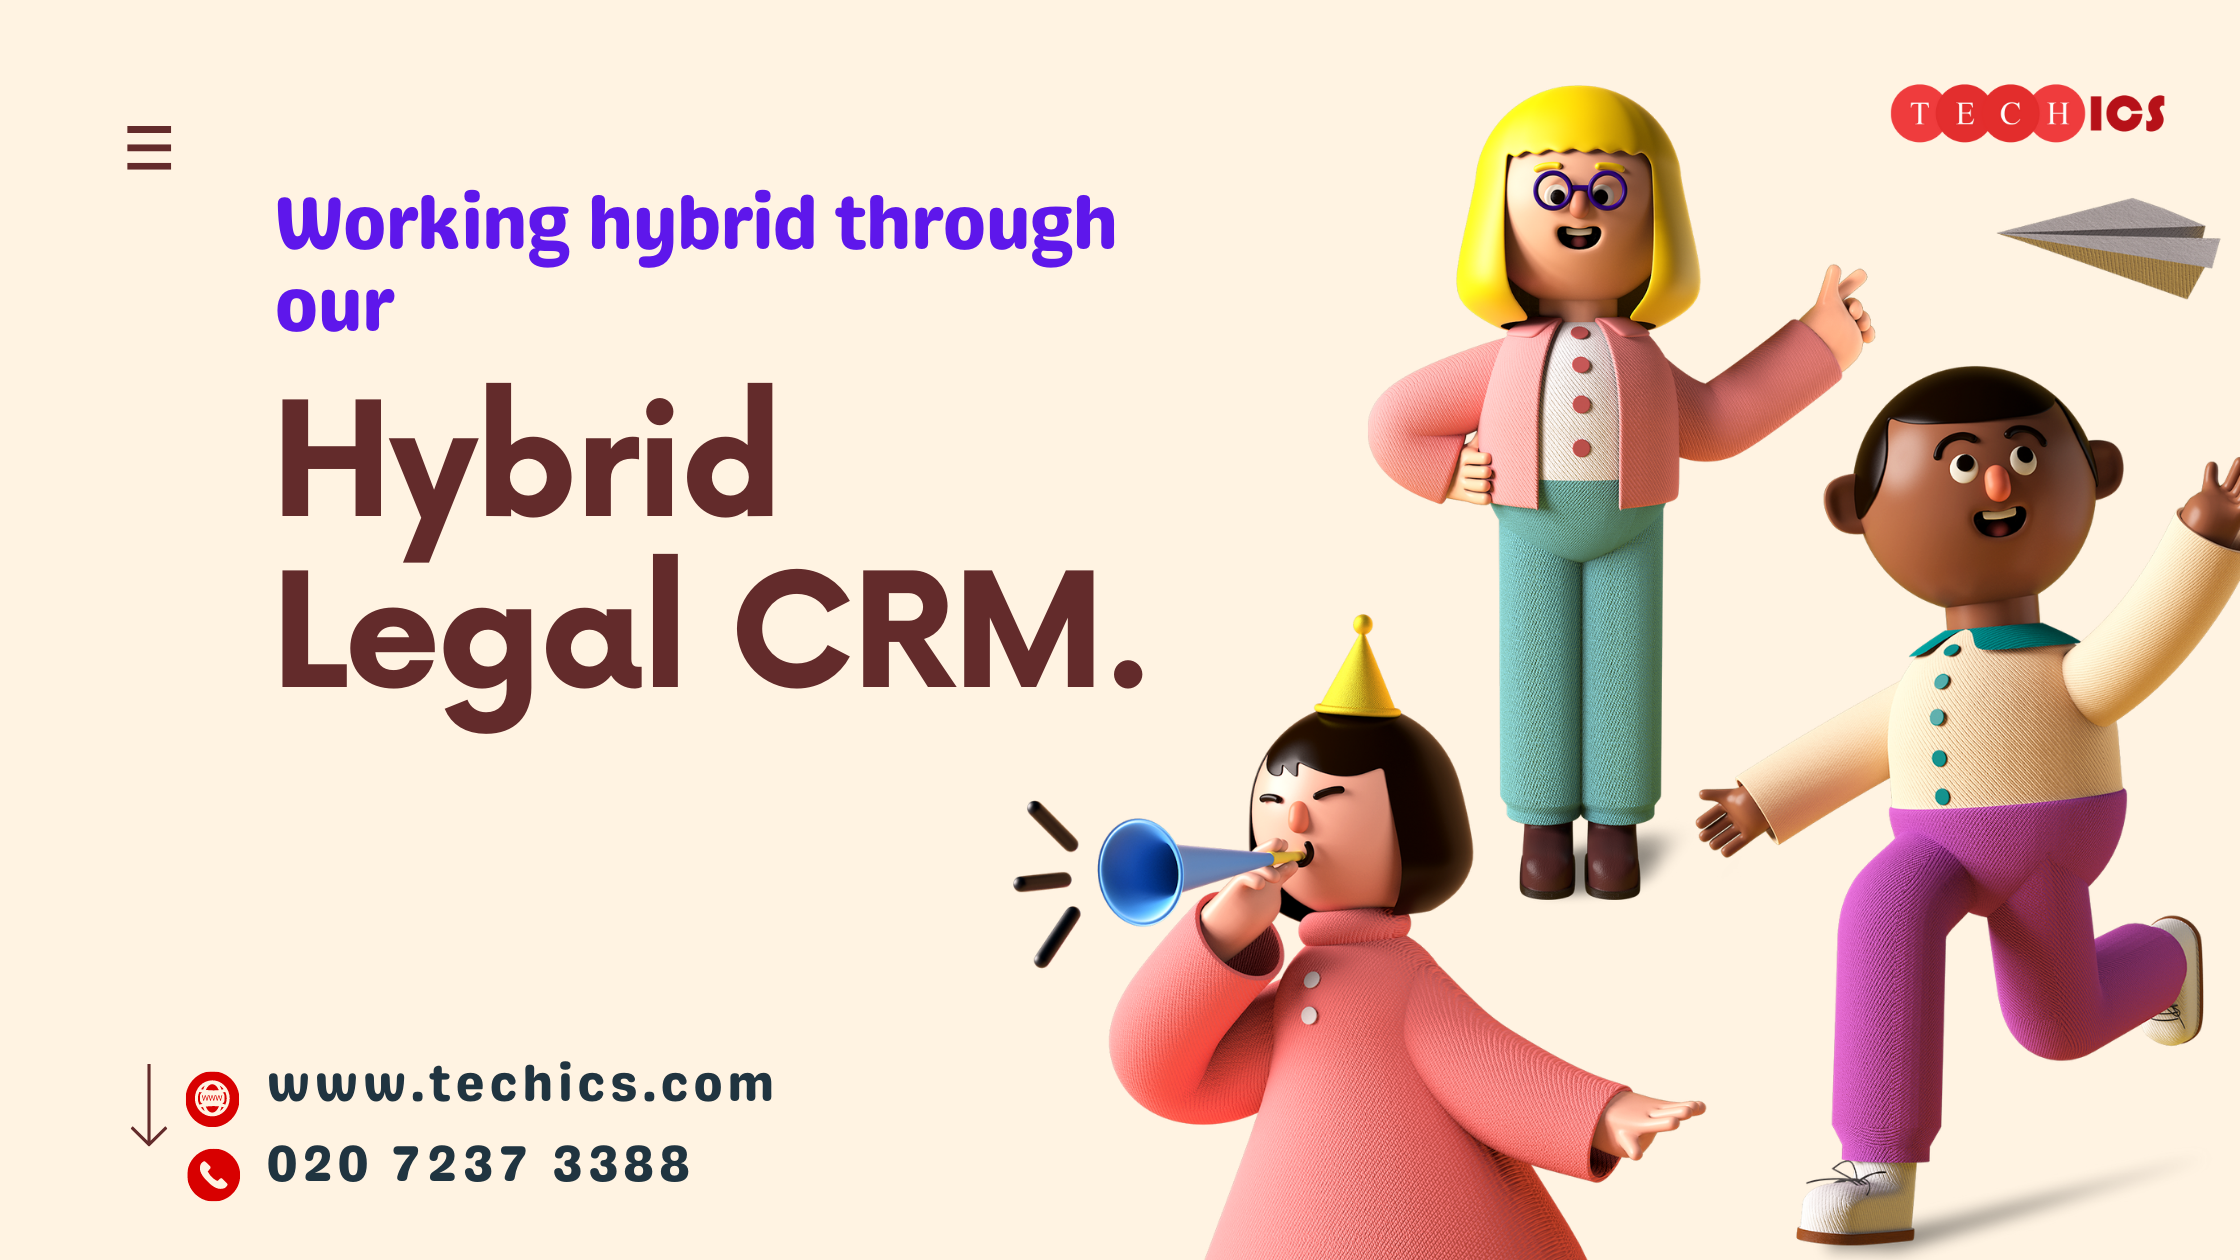 Working hybrid through our Hybrid Legal CRM